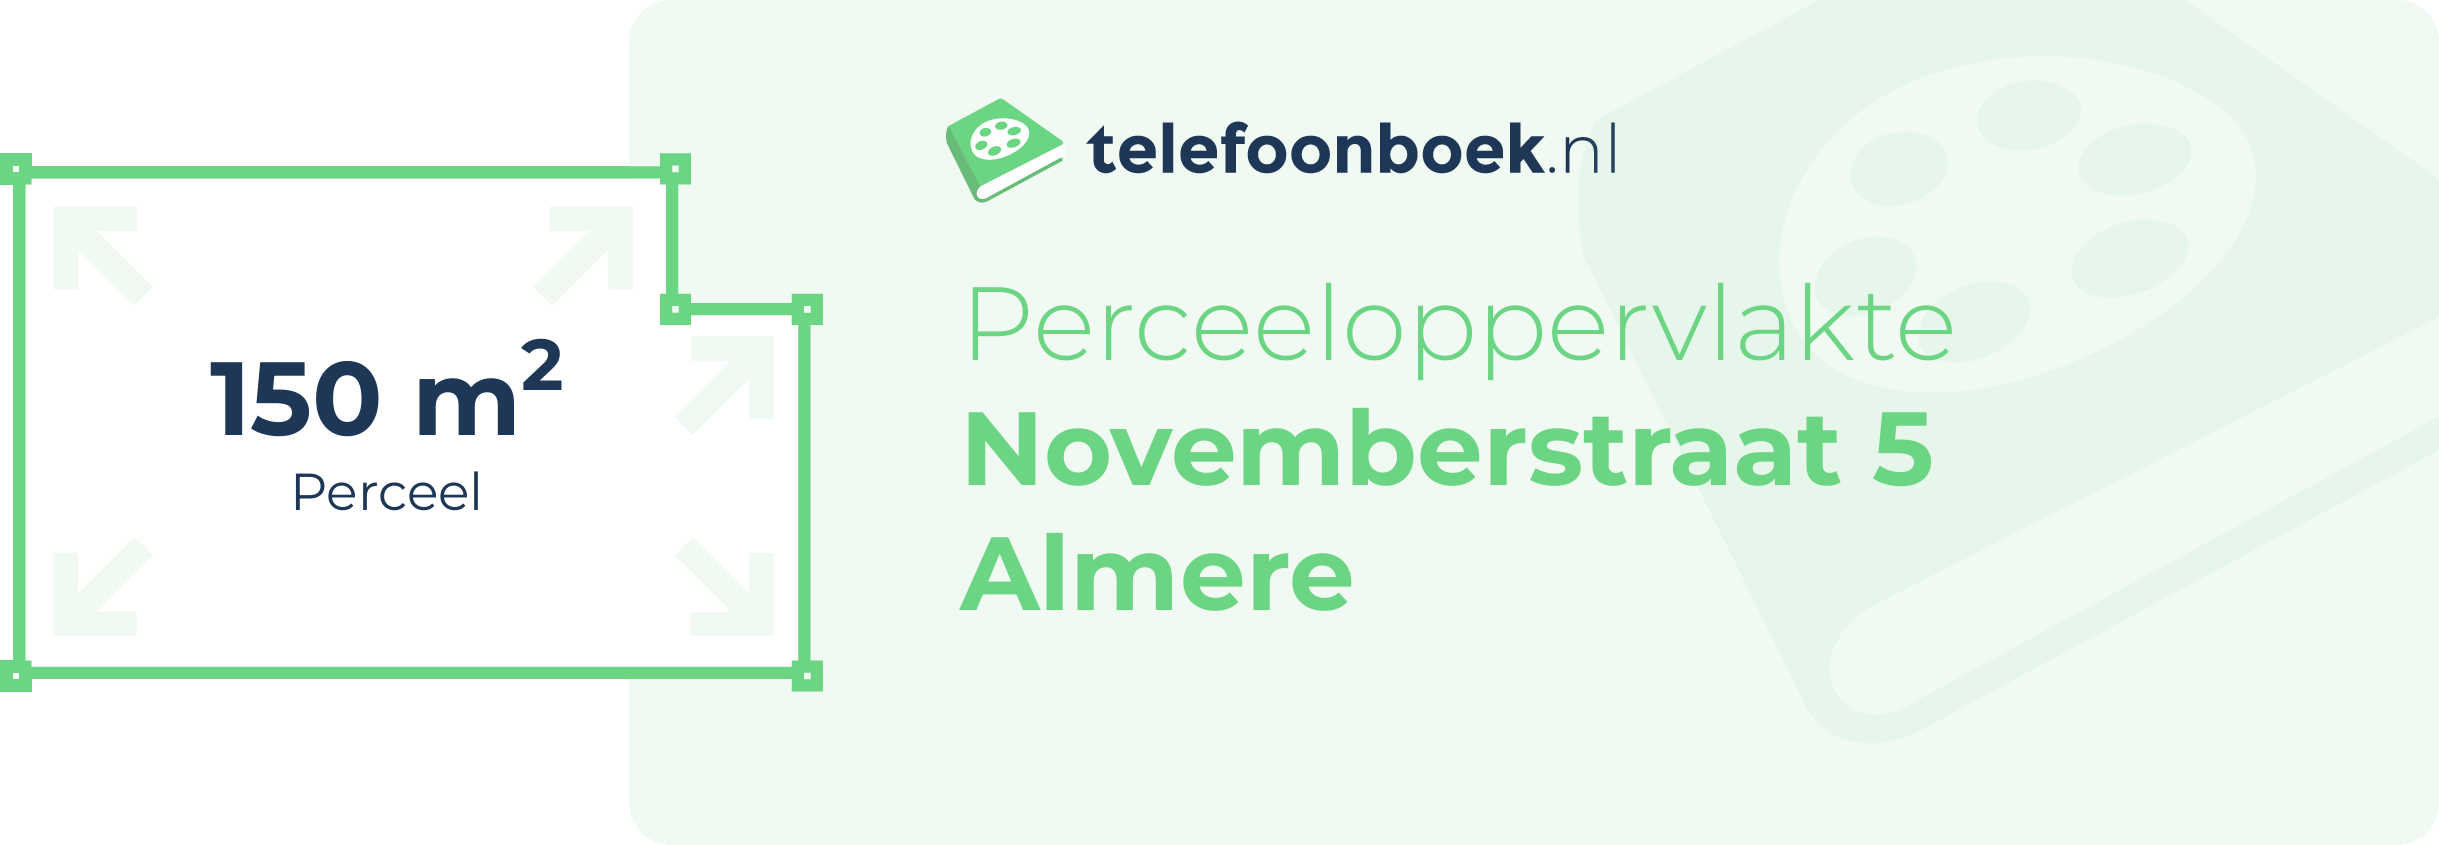 Perceeloppervlakte Novemberstraat 5 Almere